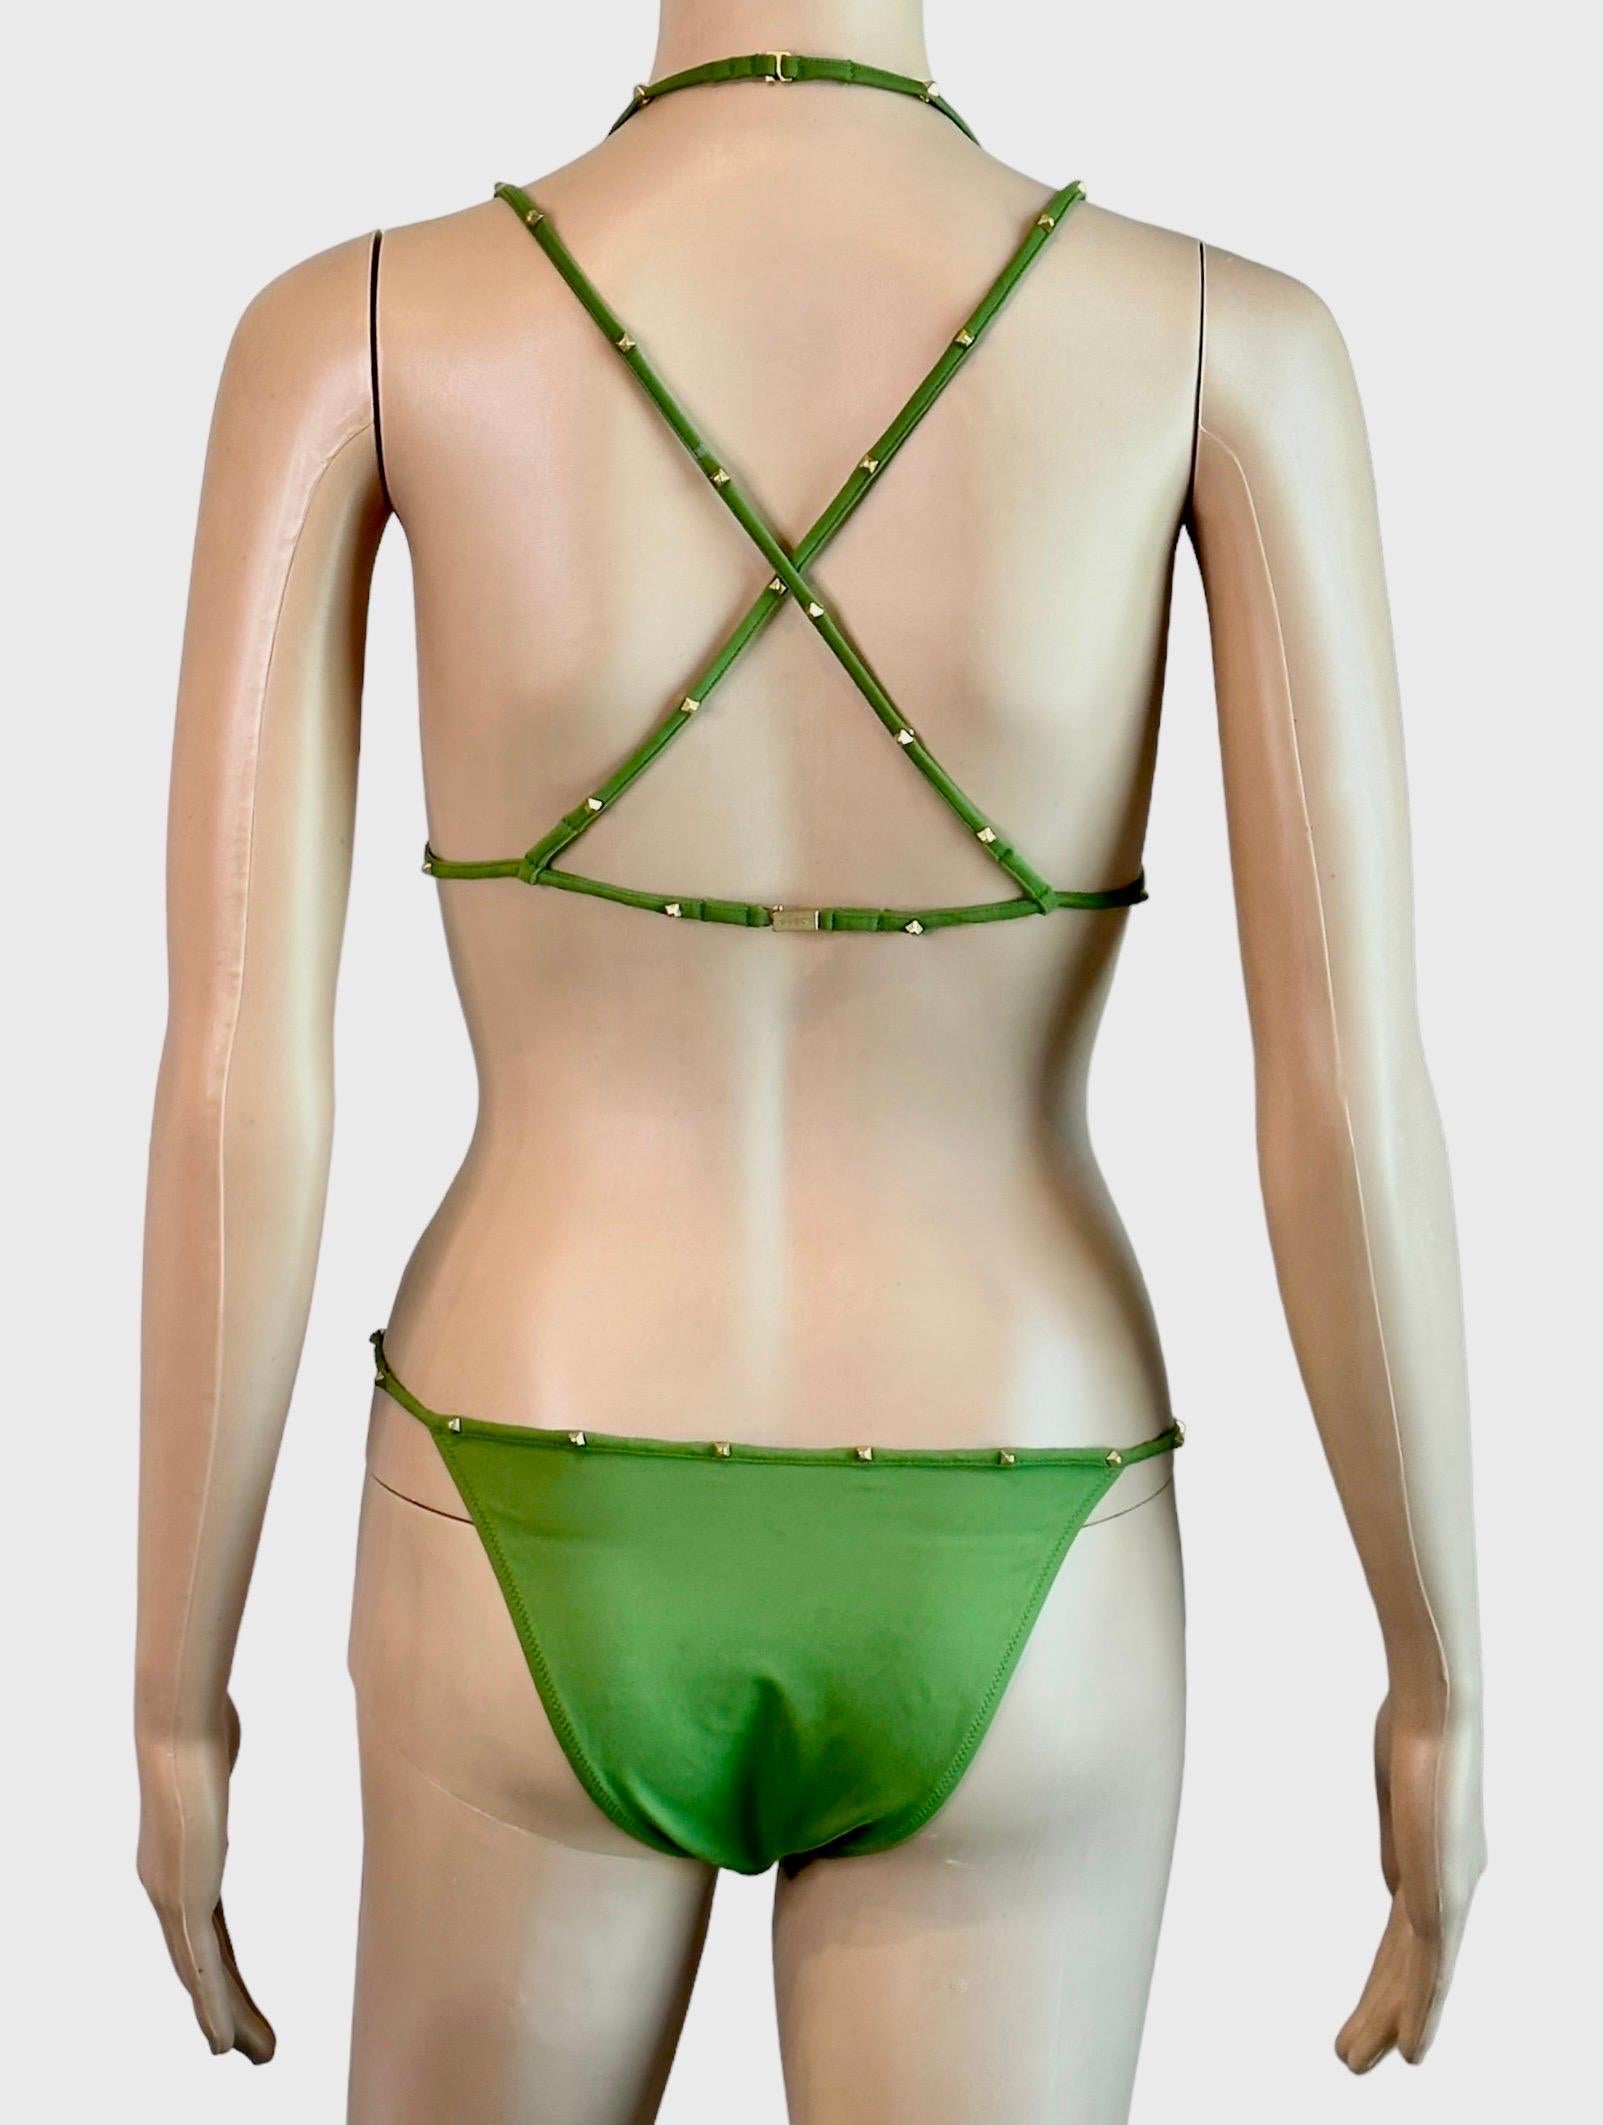 Tom Ford for Gucci F/W 2003 Bondage Studded Two-Piece Bikini Swimsuit Swimwear For Sale 4